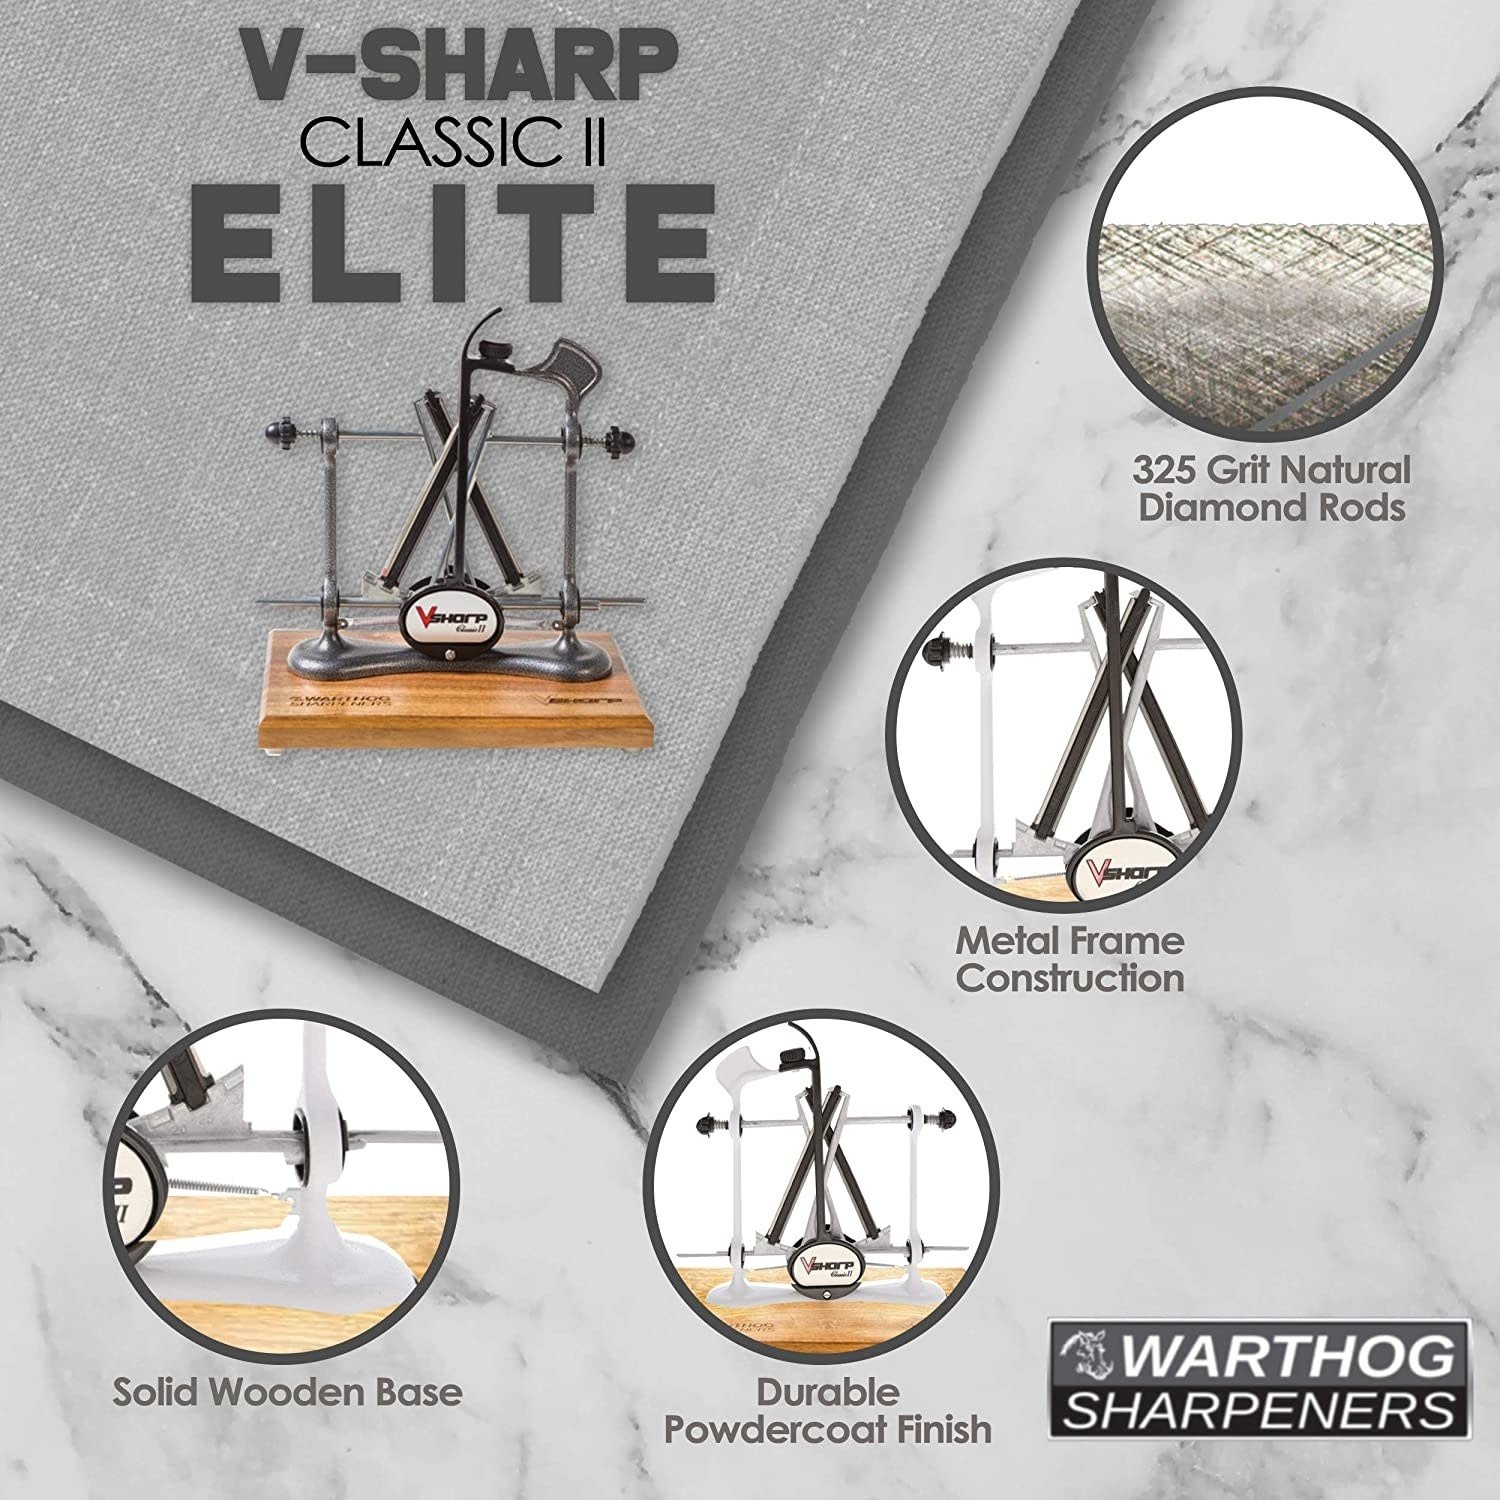 Warthog V-Sharp Classic II Elite Knife Sharpener Steel Frame Black